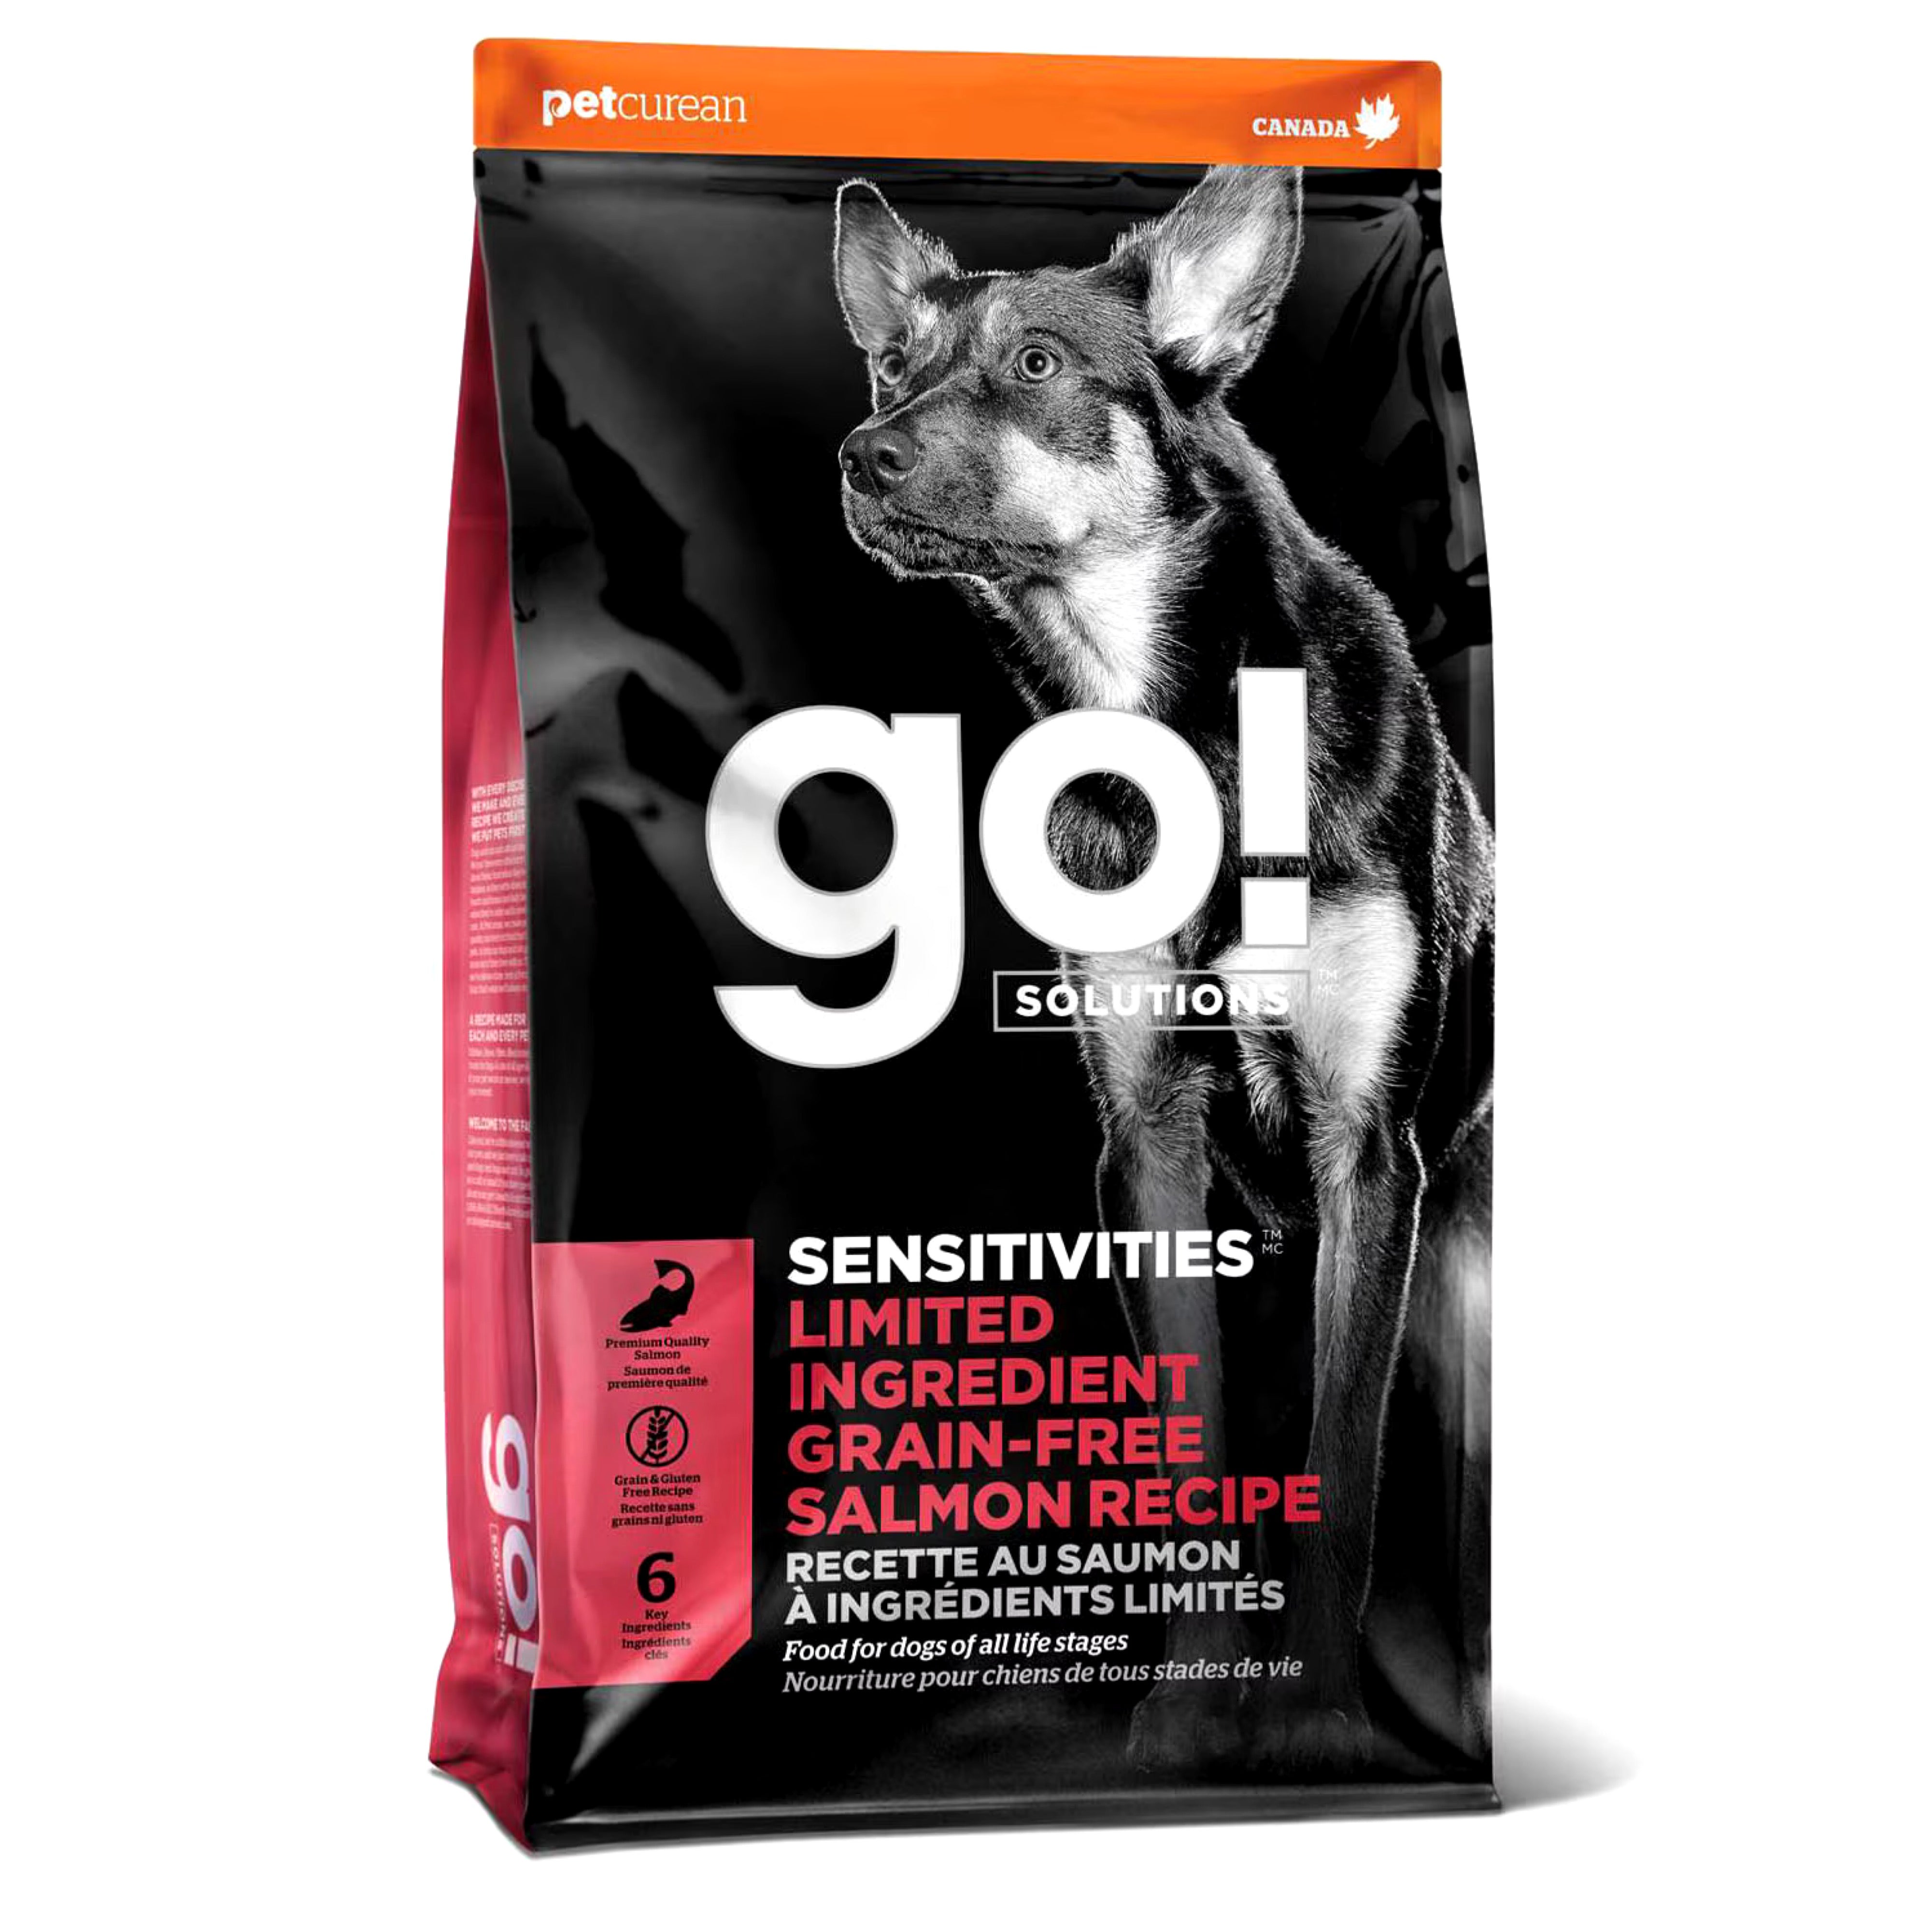 Go! Solutions Sensitivities Limited Ingredient Grain-Free Salmon Recipe Dog Food